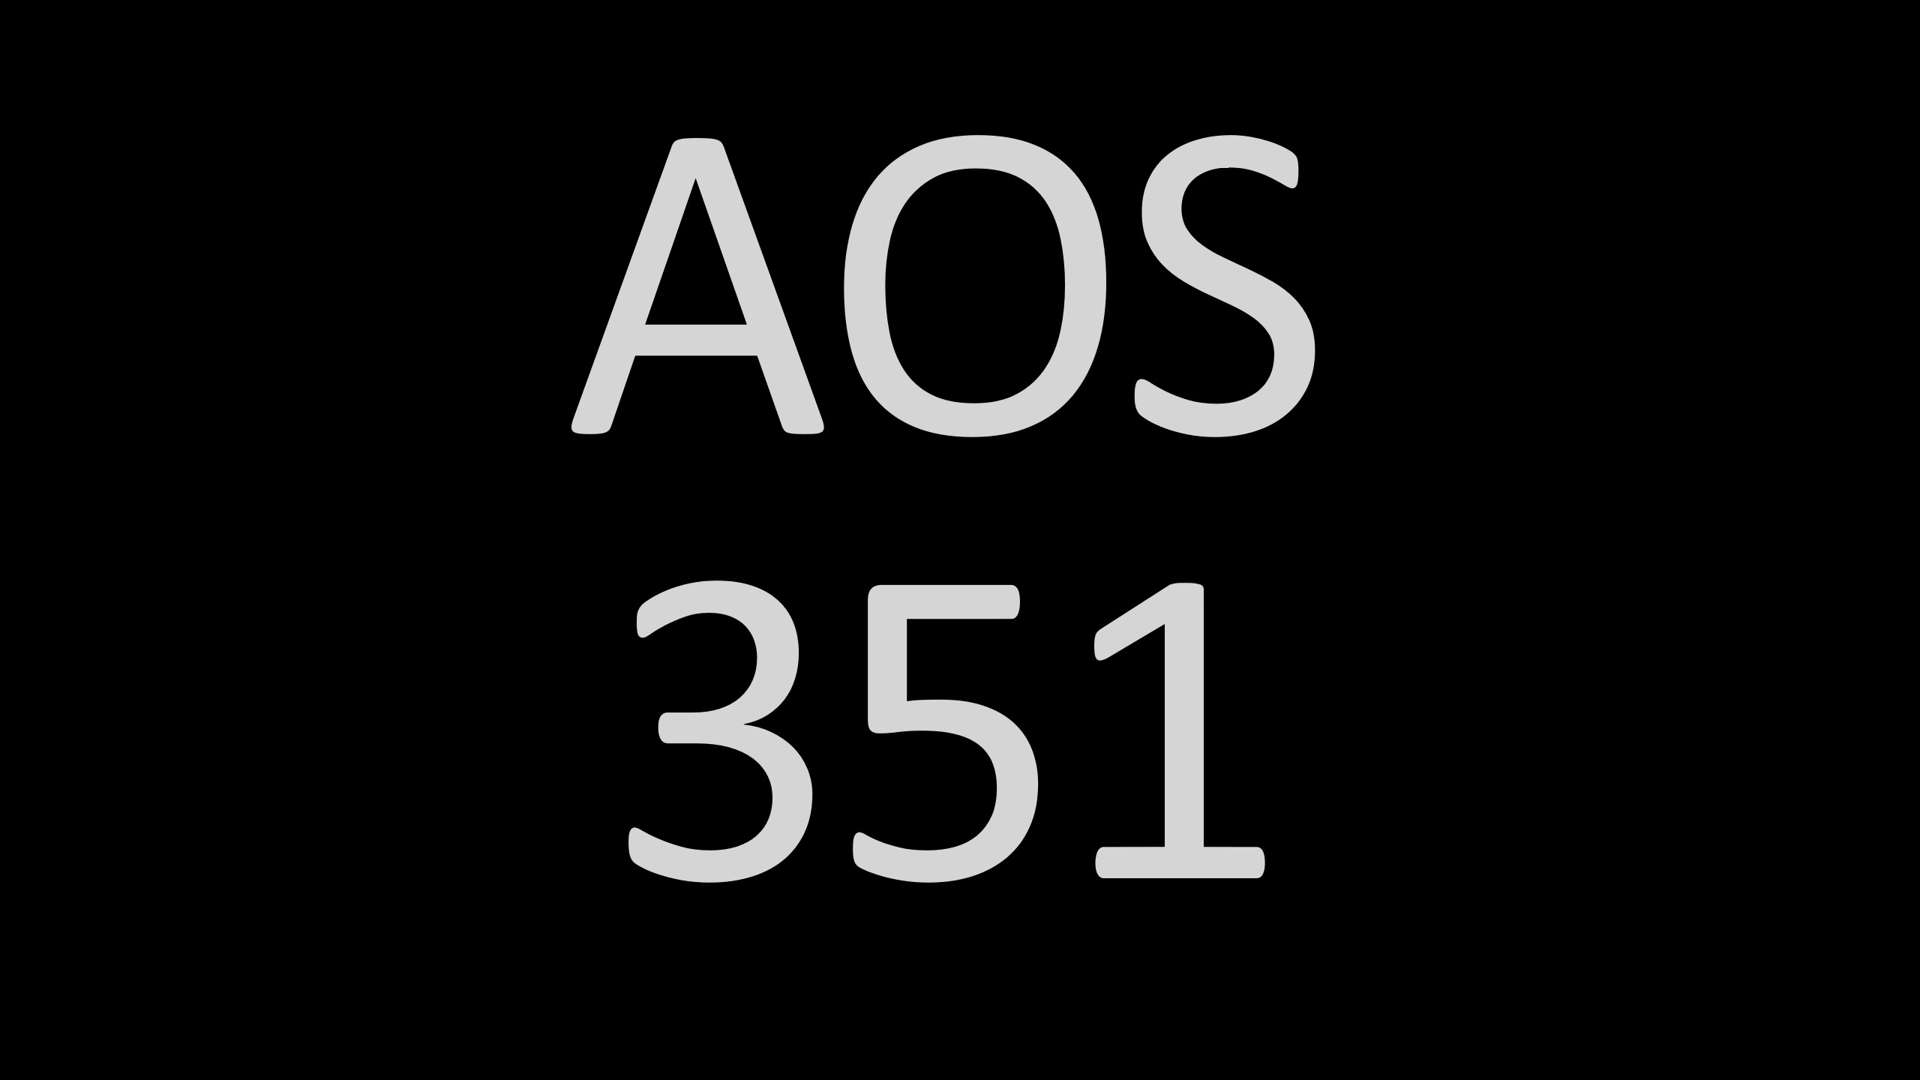 <p>AOS 351 Registration number&nbsp;</p>